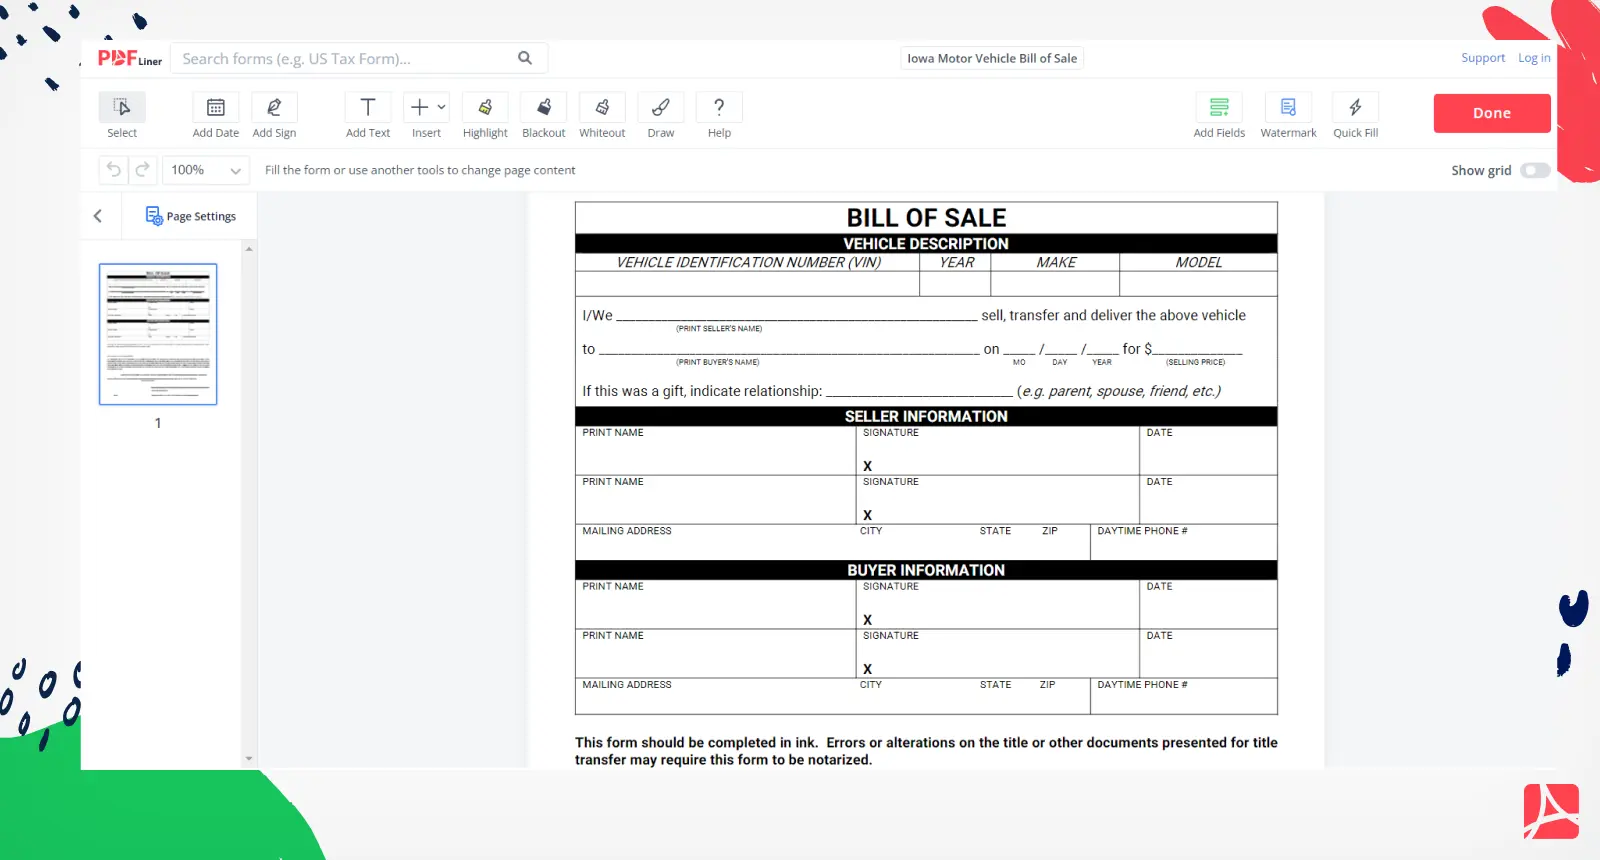 Iowa Motor Vehicle Bill of Sale Form Screenshot